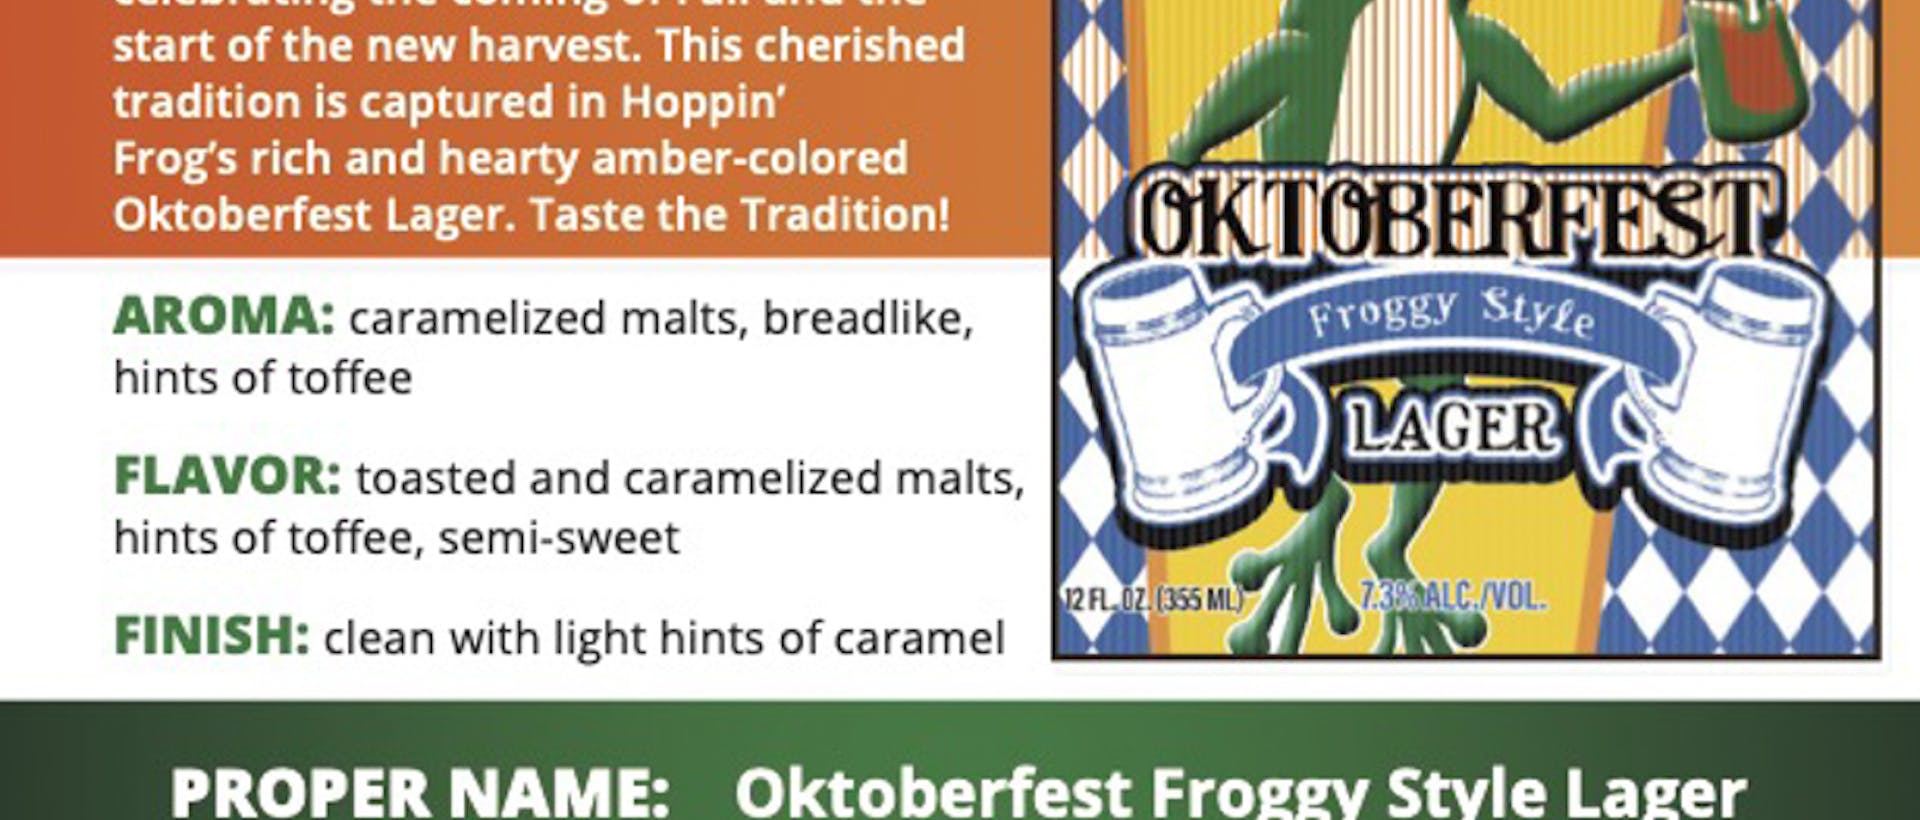 HF_Sell Sheet - Seasonal Series - Oktoberfest Froggy-Style Lager (updated 03-14-2022)